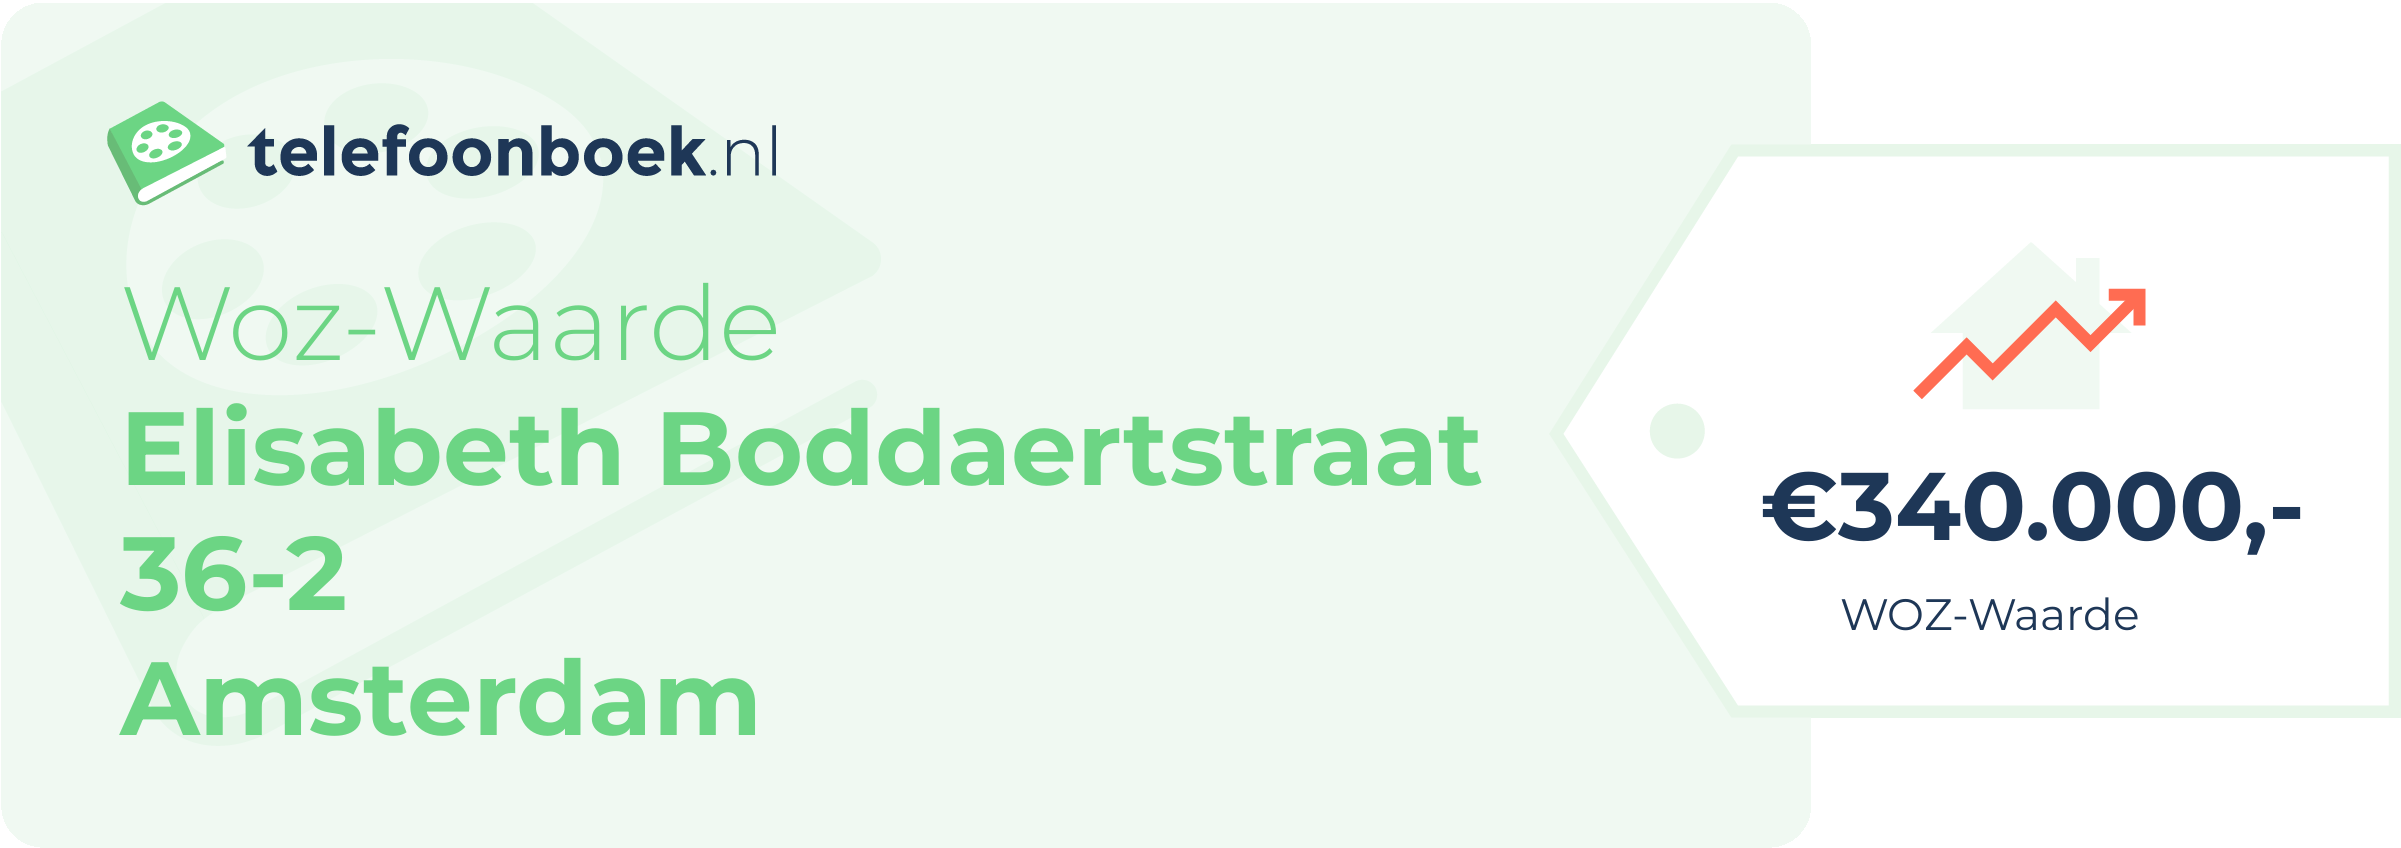 WOZ-waarde Elisabeth Boddaertstraat 36-2 Amsterdam